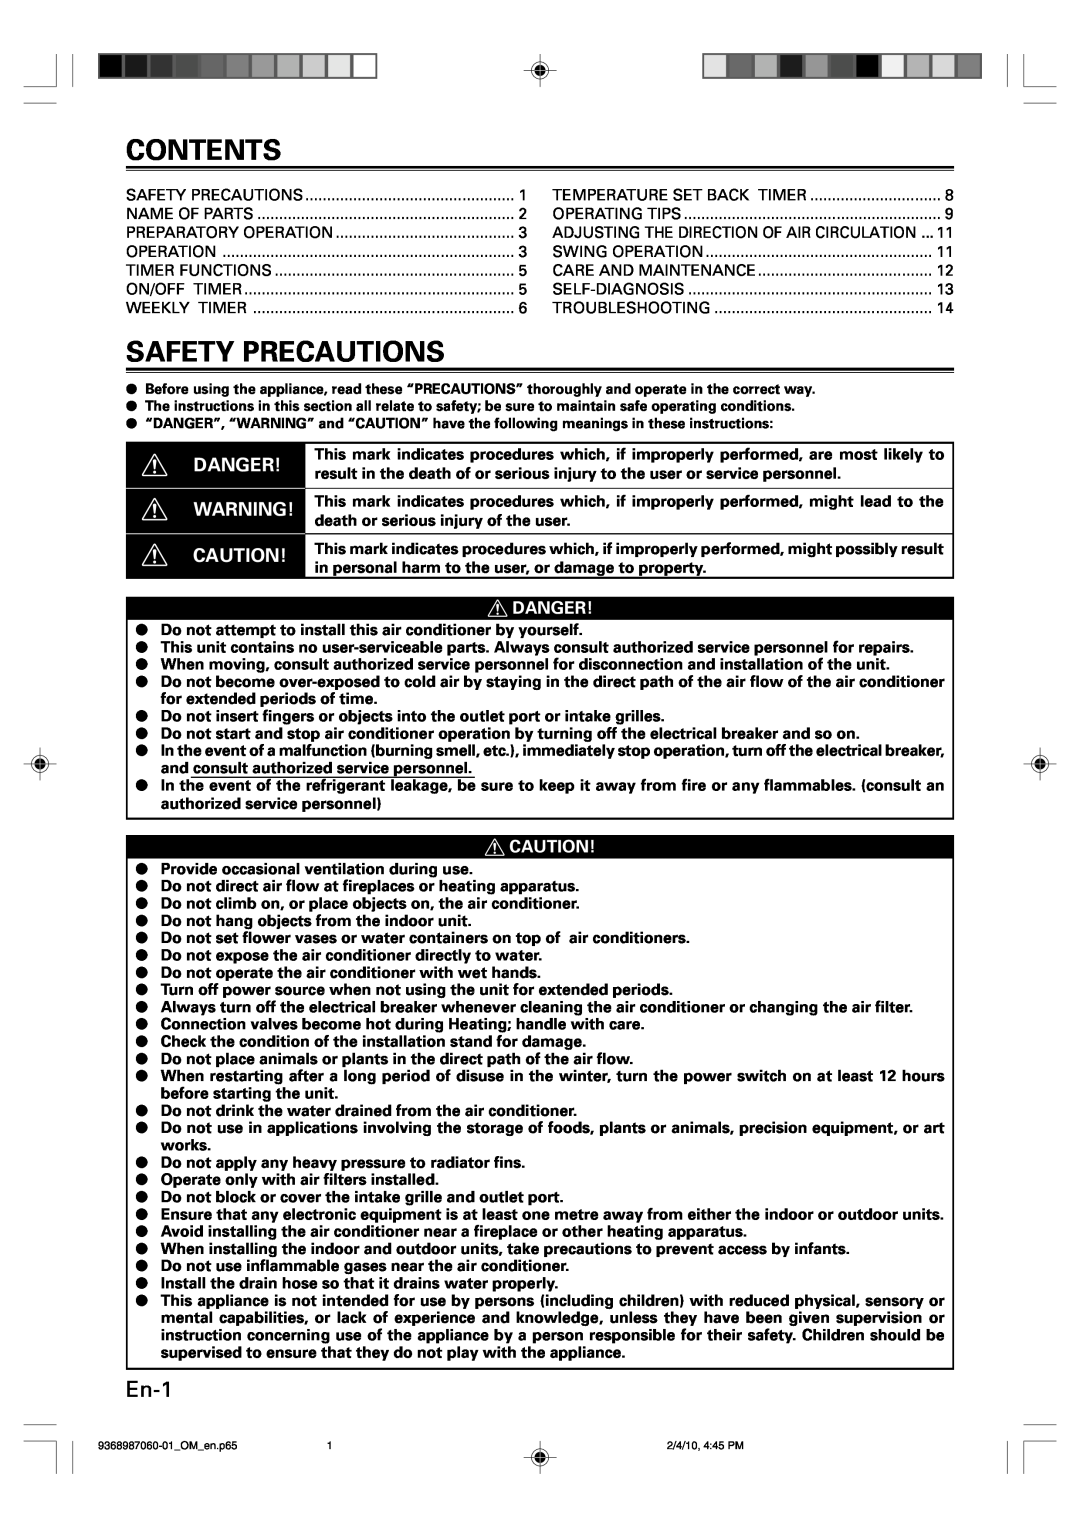 Friedrich P/N9368987060-01 manual Contents, Safety Precautions, En-1, Danger 